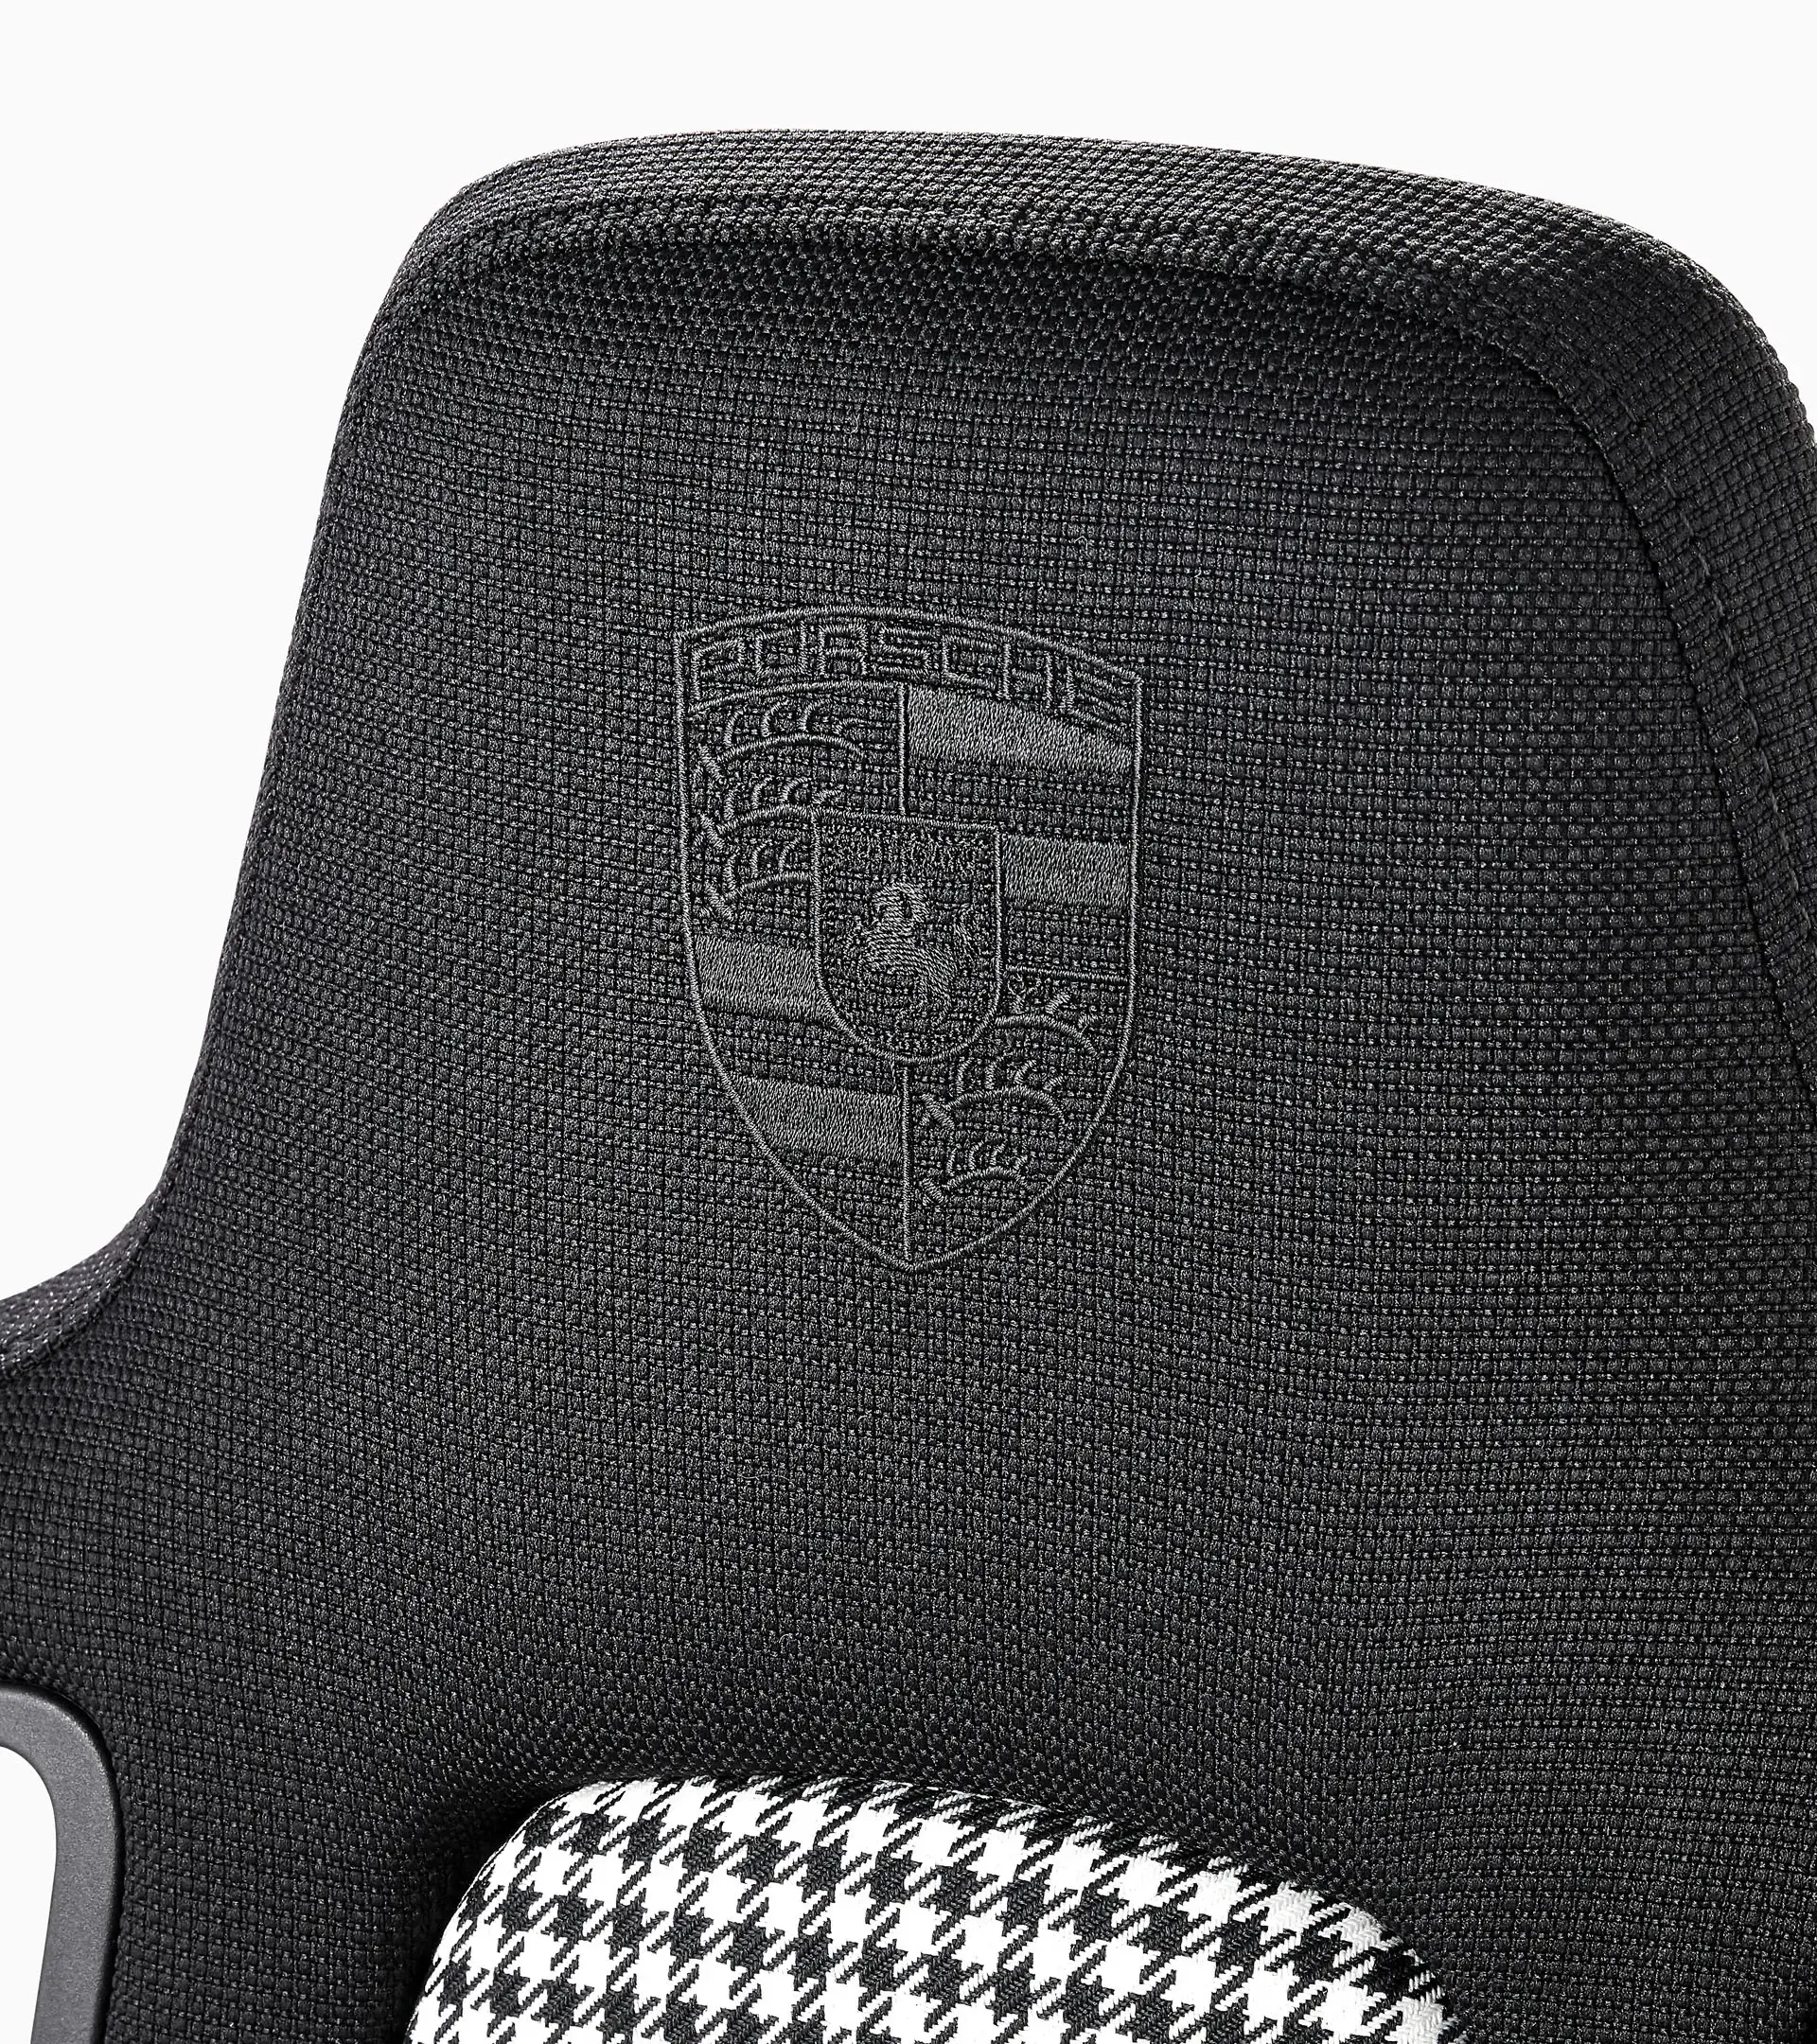 RECARO x Porsche Gaming Chair Pepita – Ltd.